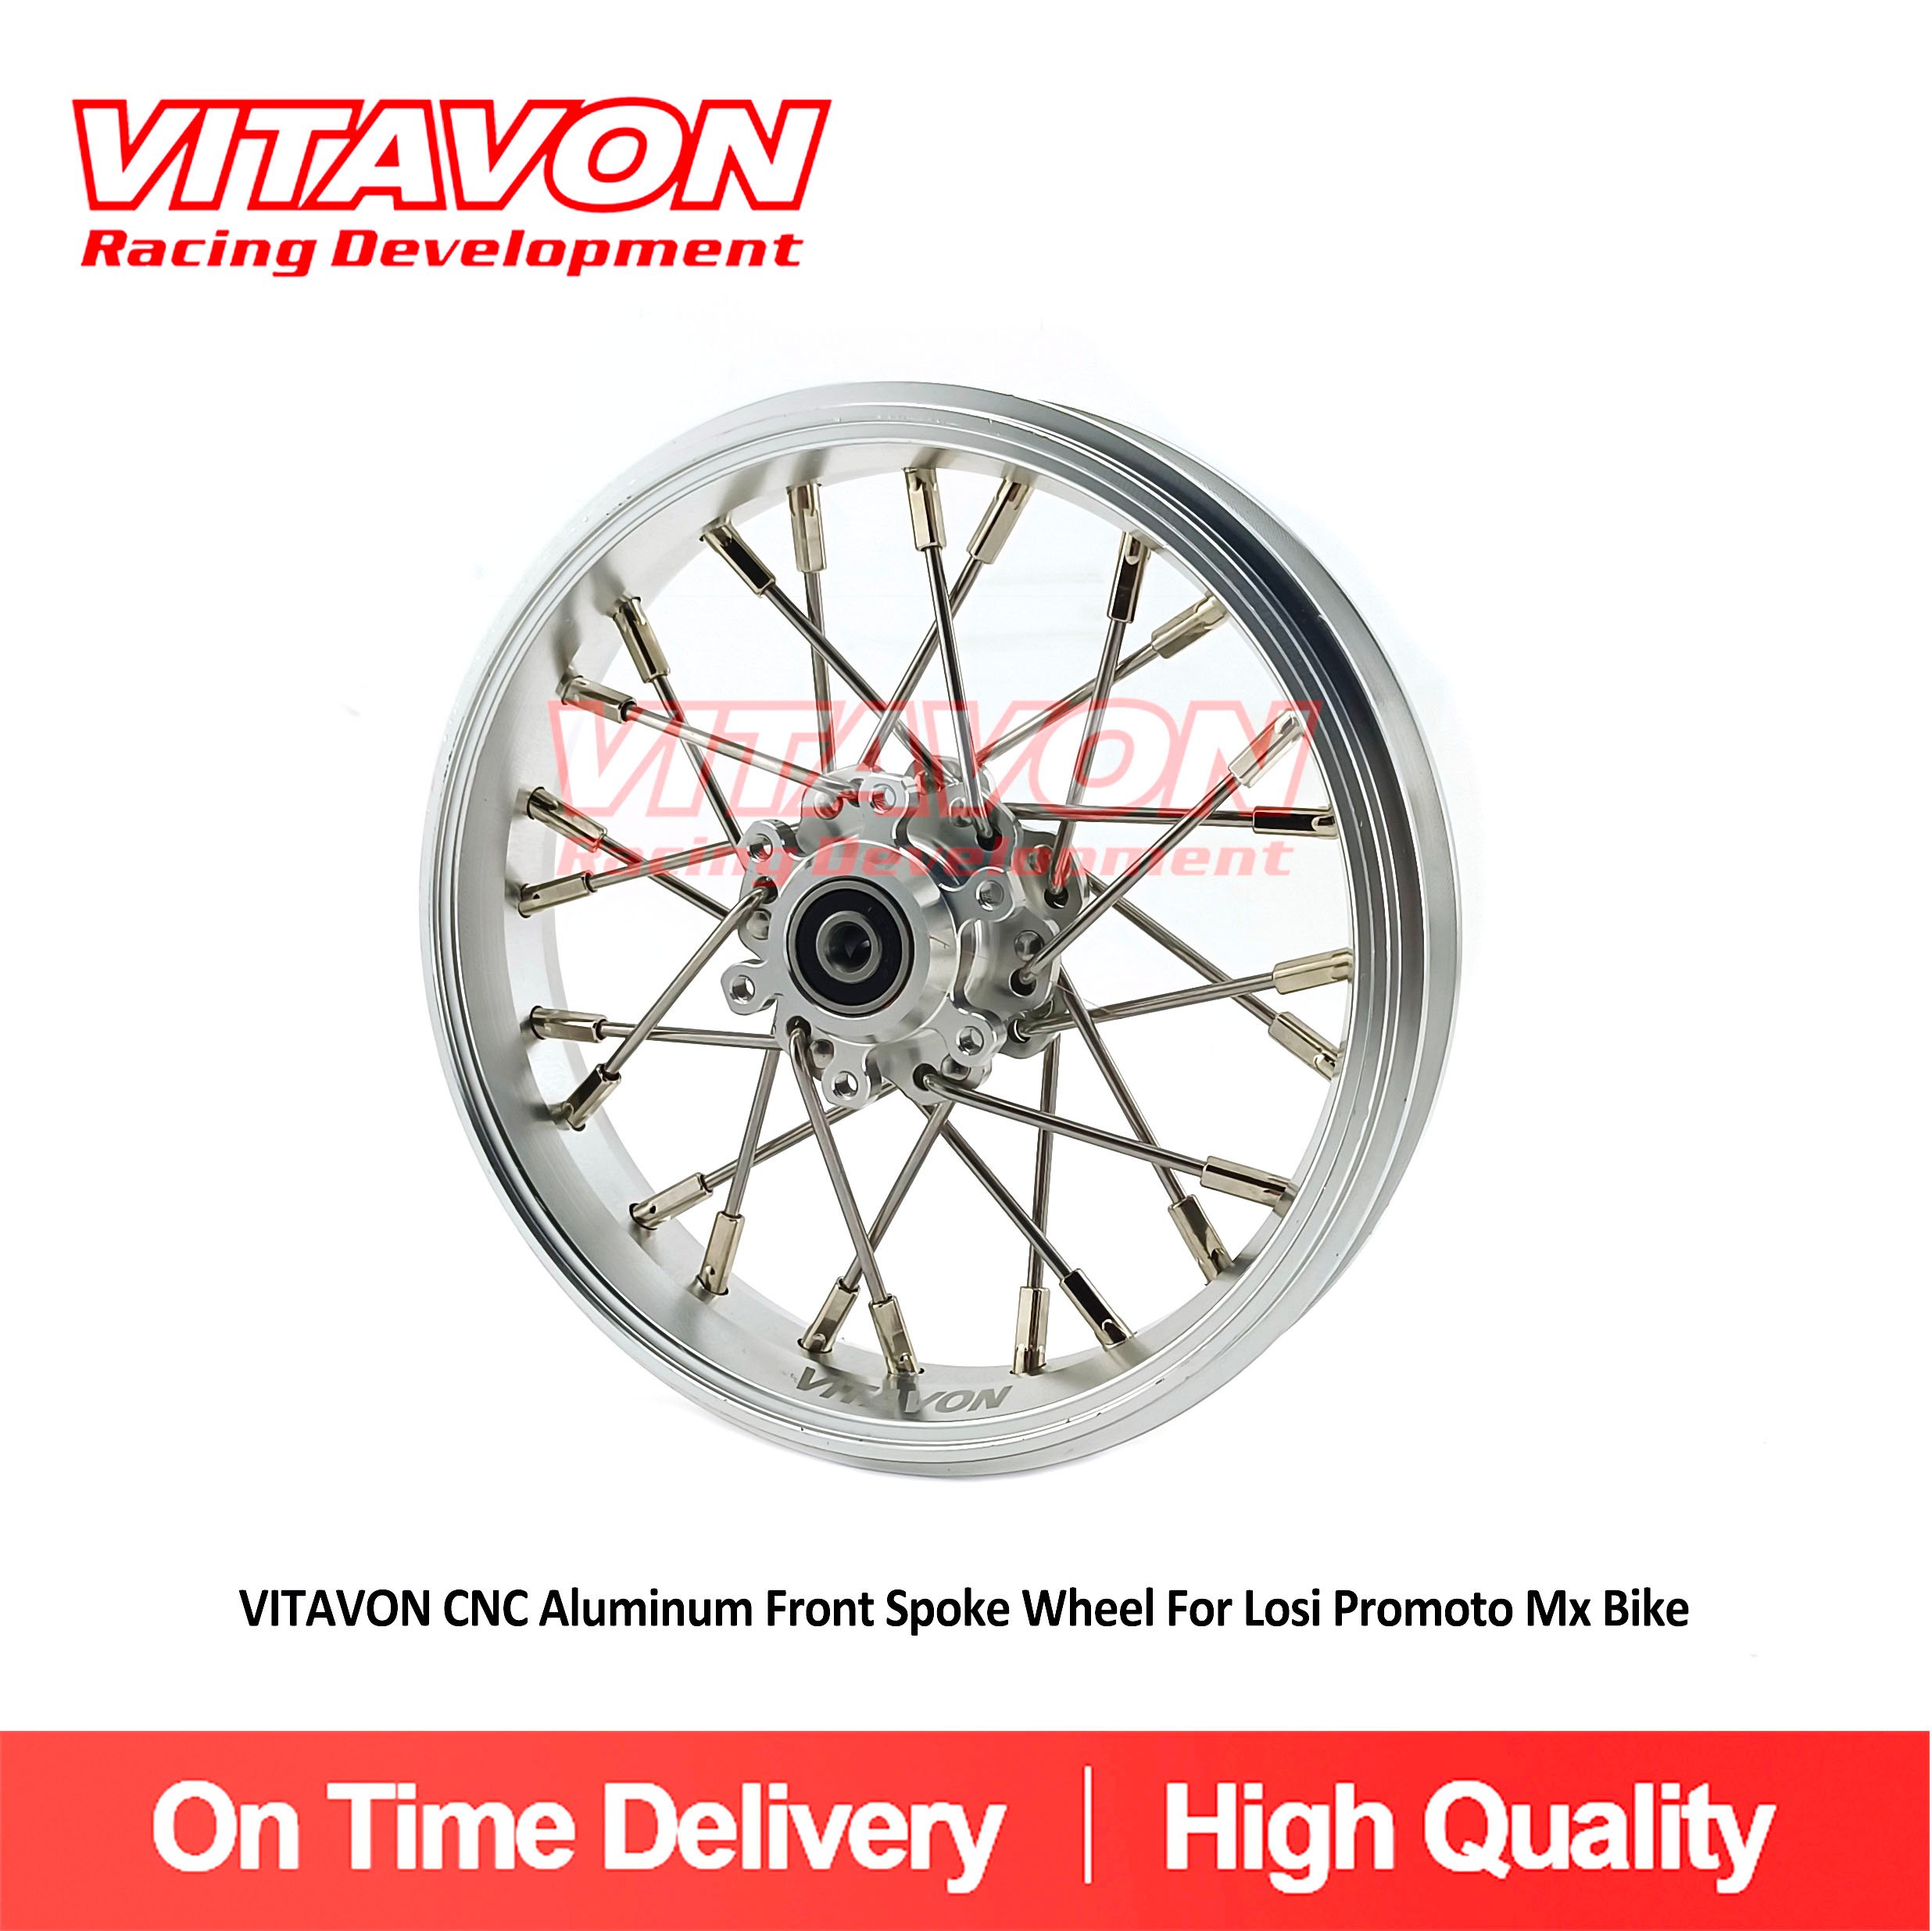 VitavonVITAVON CNC Aluminum Front Spoke Wheel For Losi Promoto MX